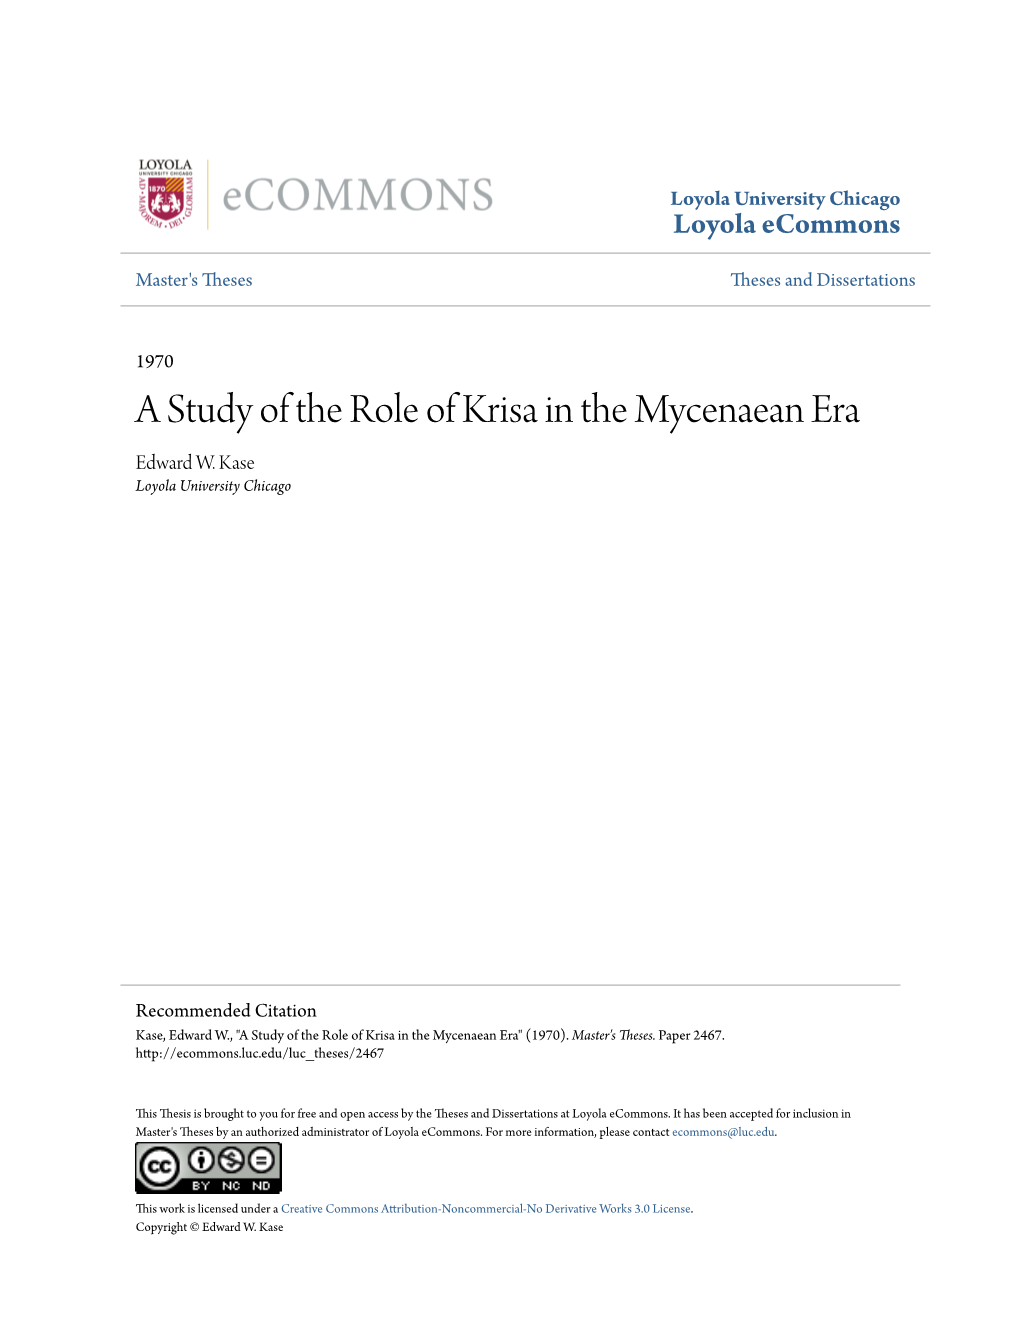 A Study of the Role of Krisa in the Mycenaean Era Edward W